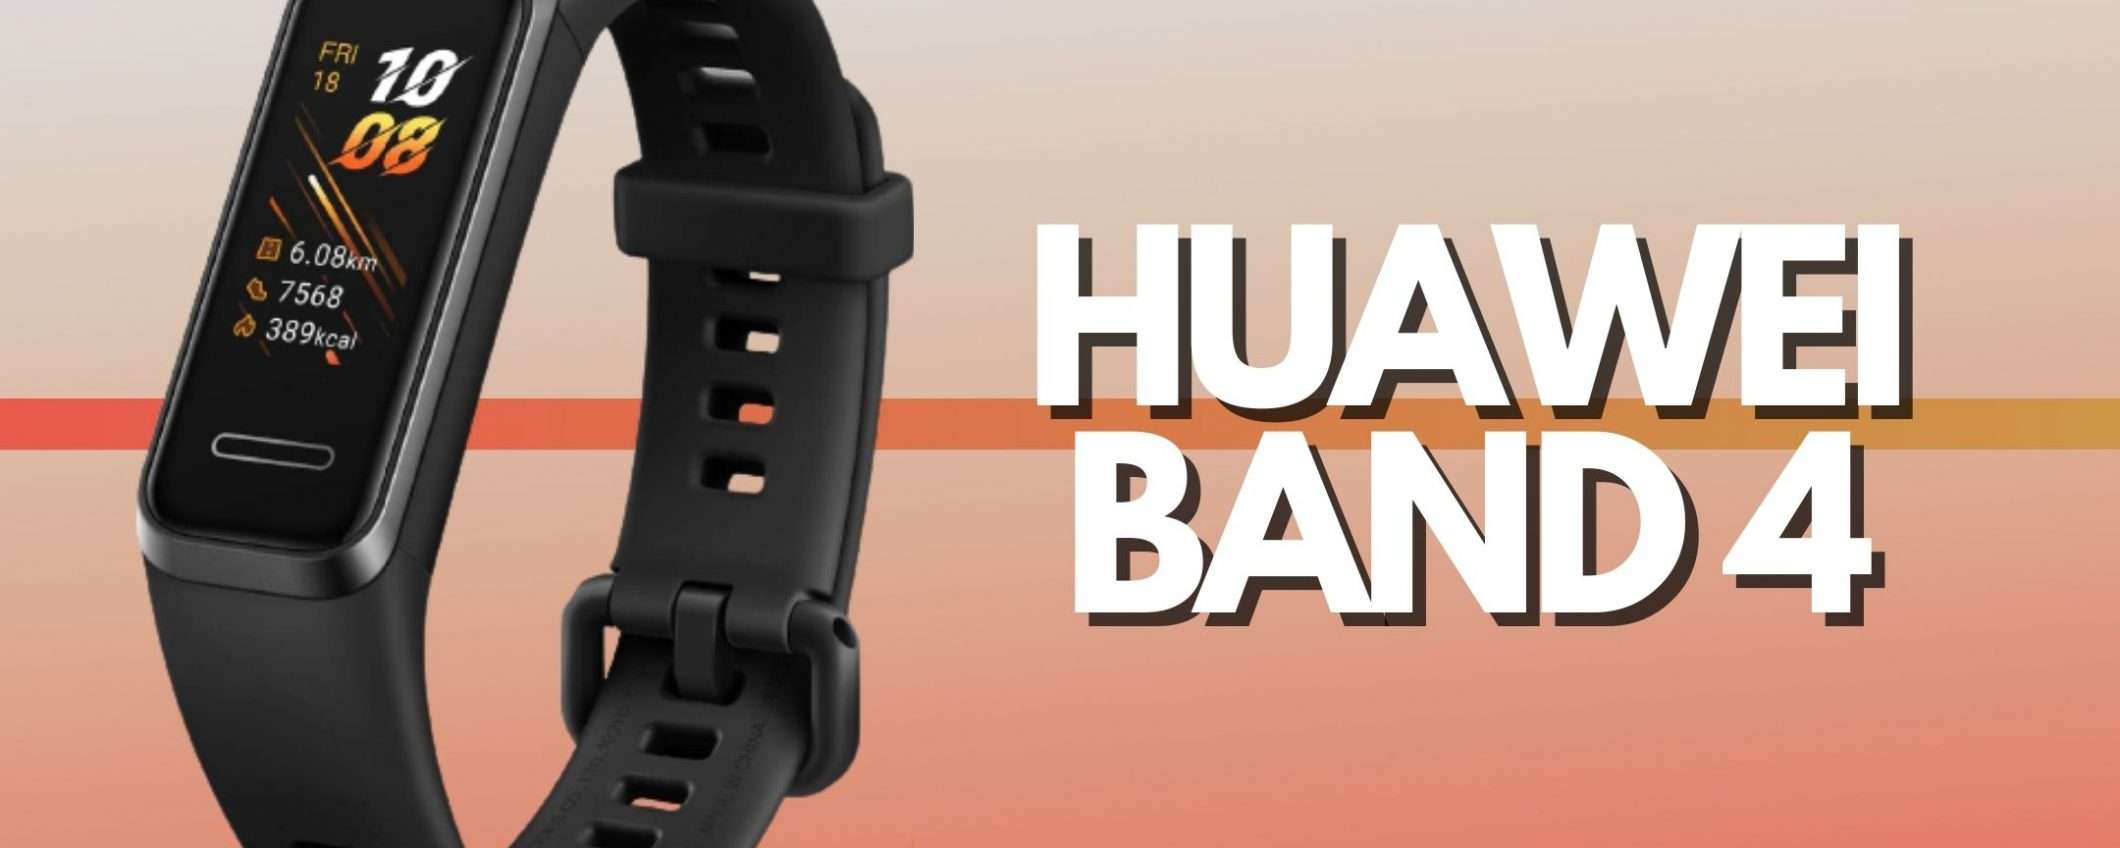 Huawei Band 4: il fitness tracker che cercavi